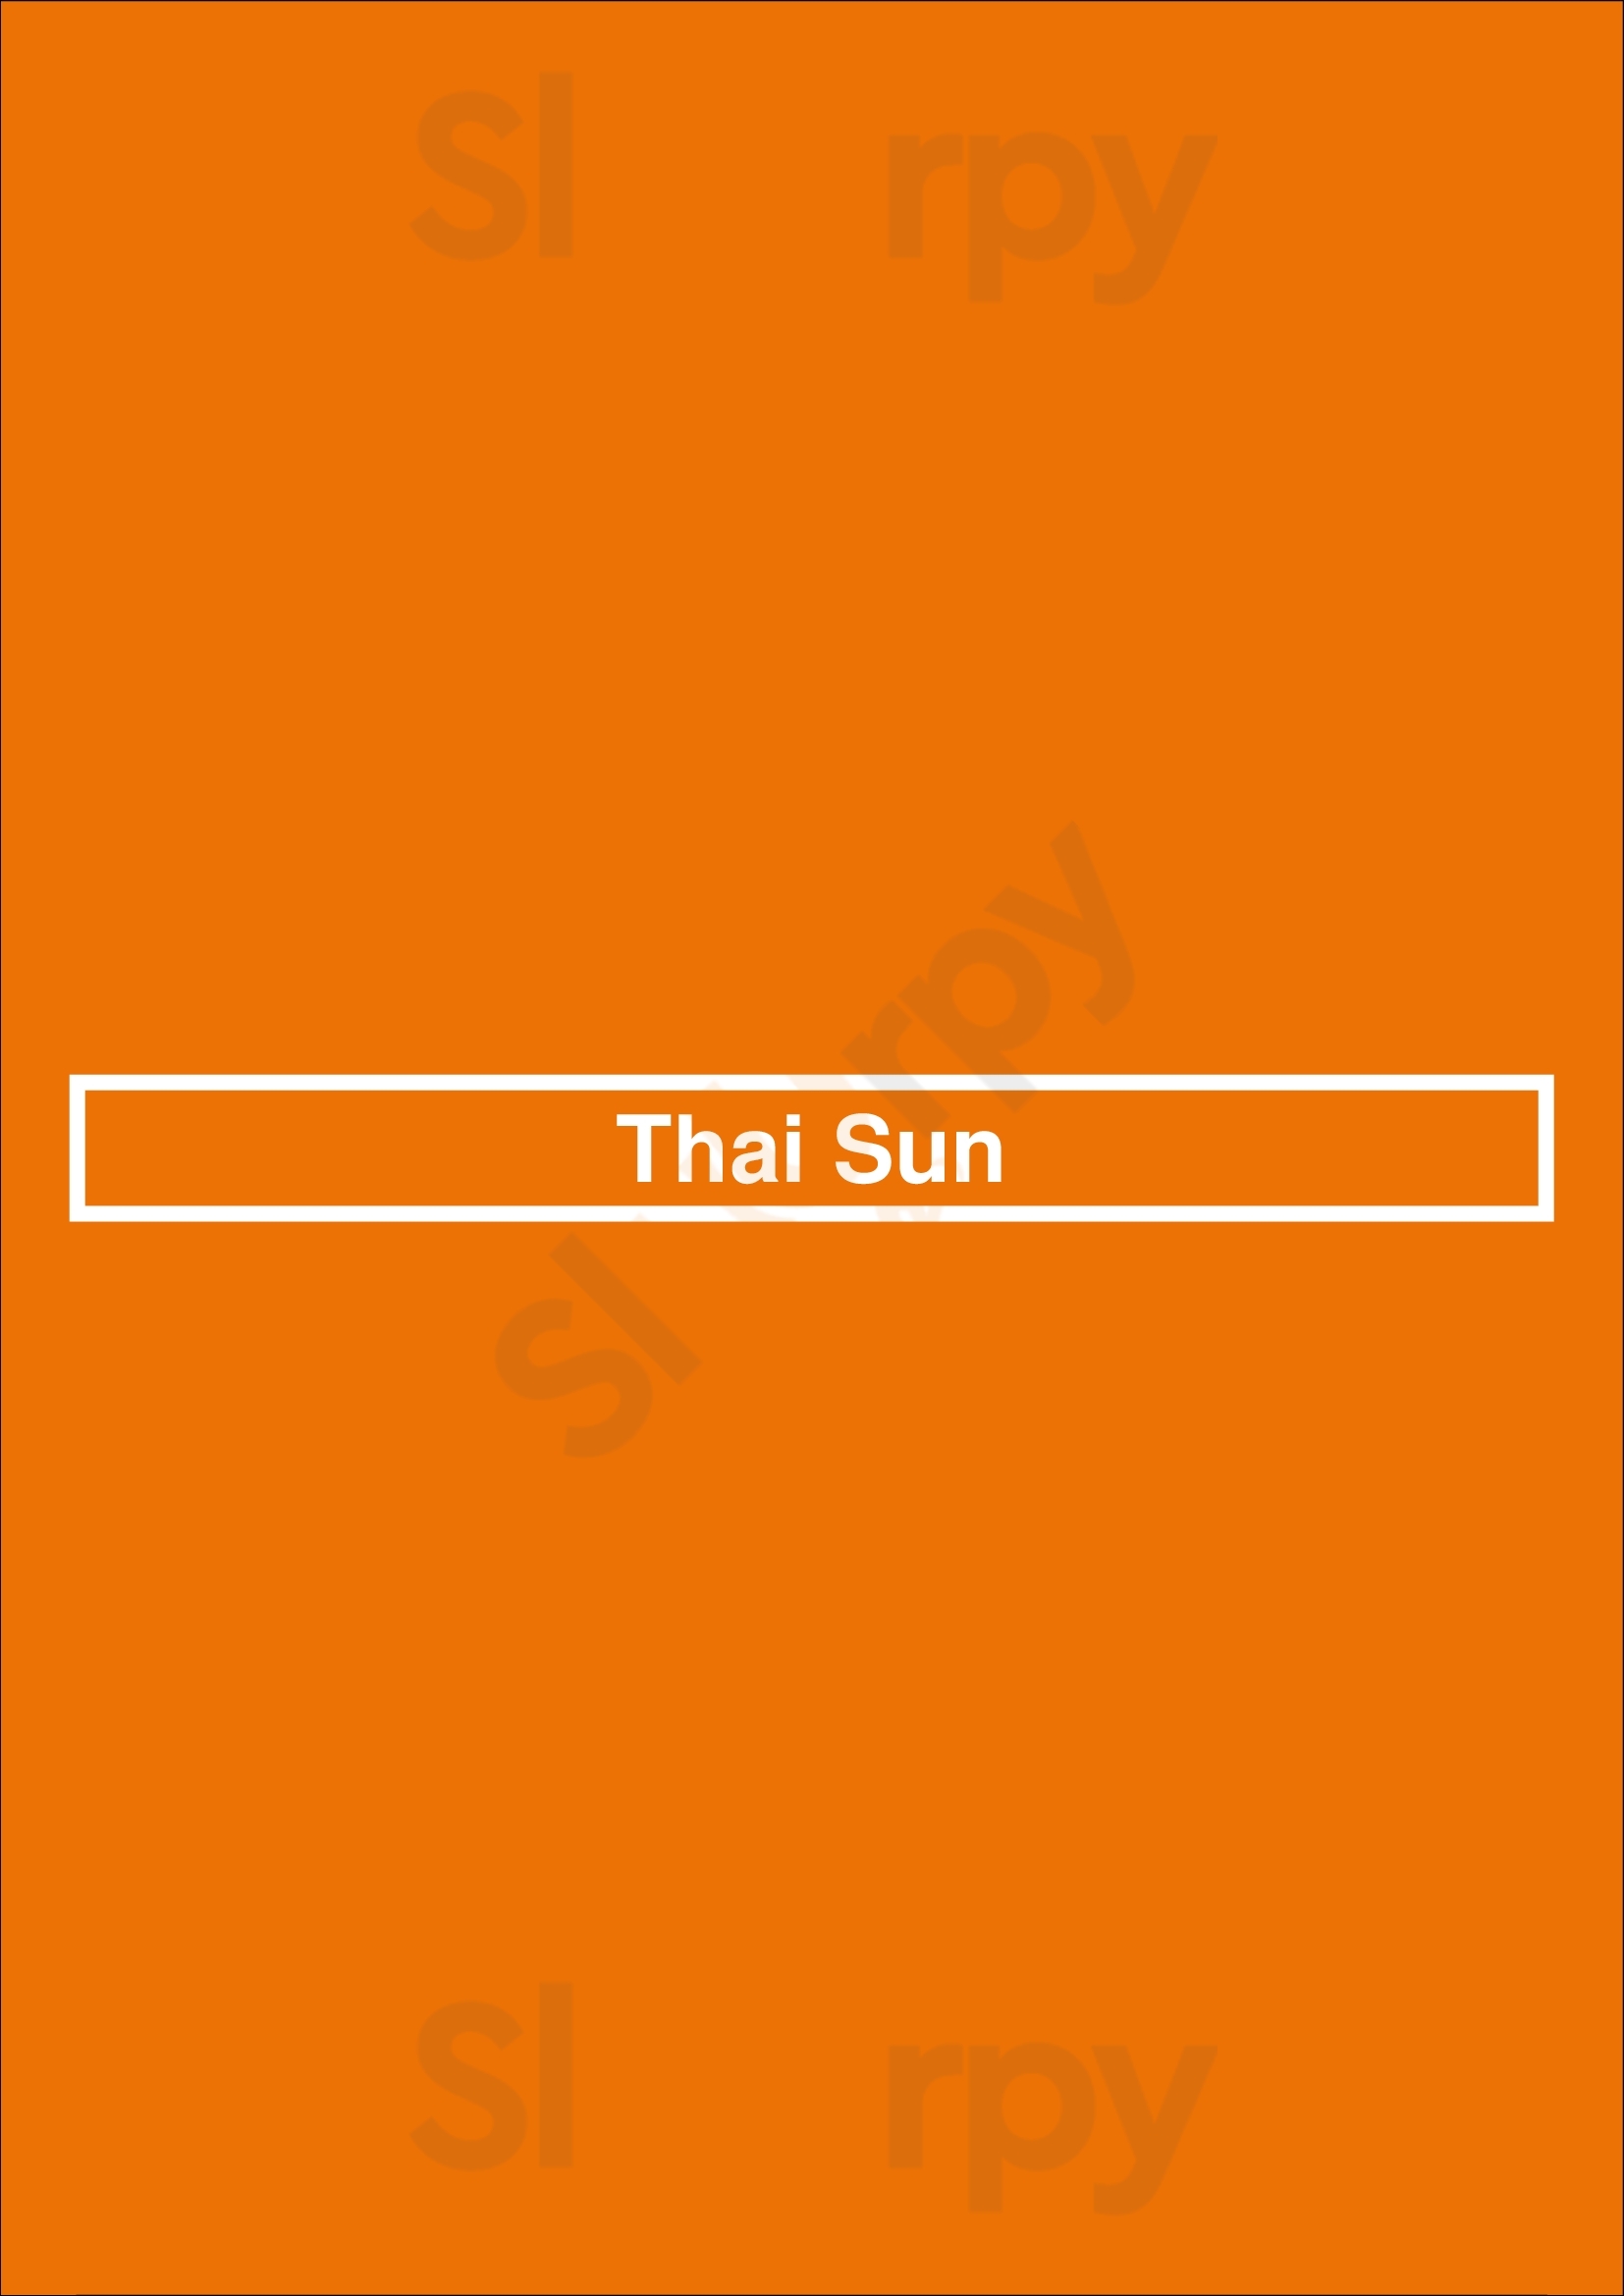 Thai Sun Waterloo Menu - 1